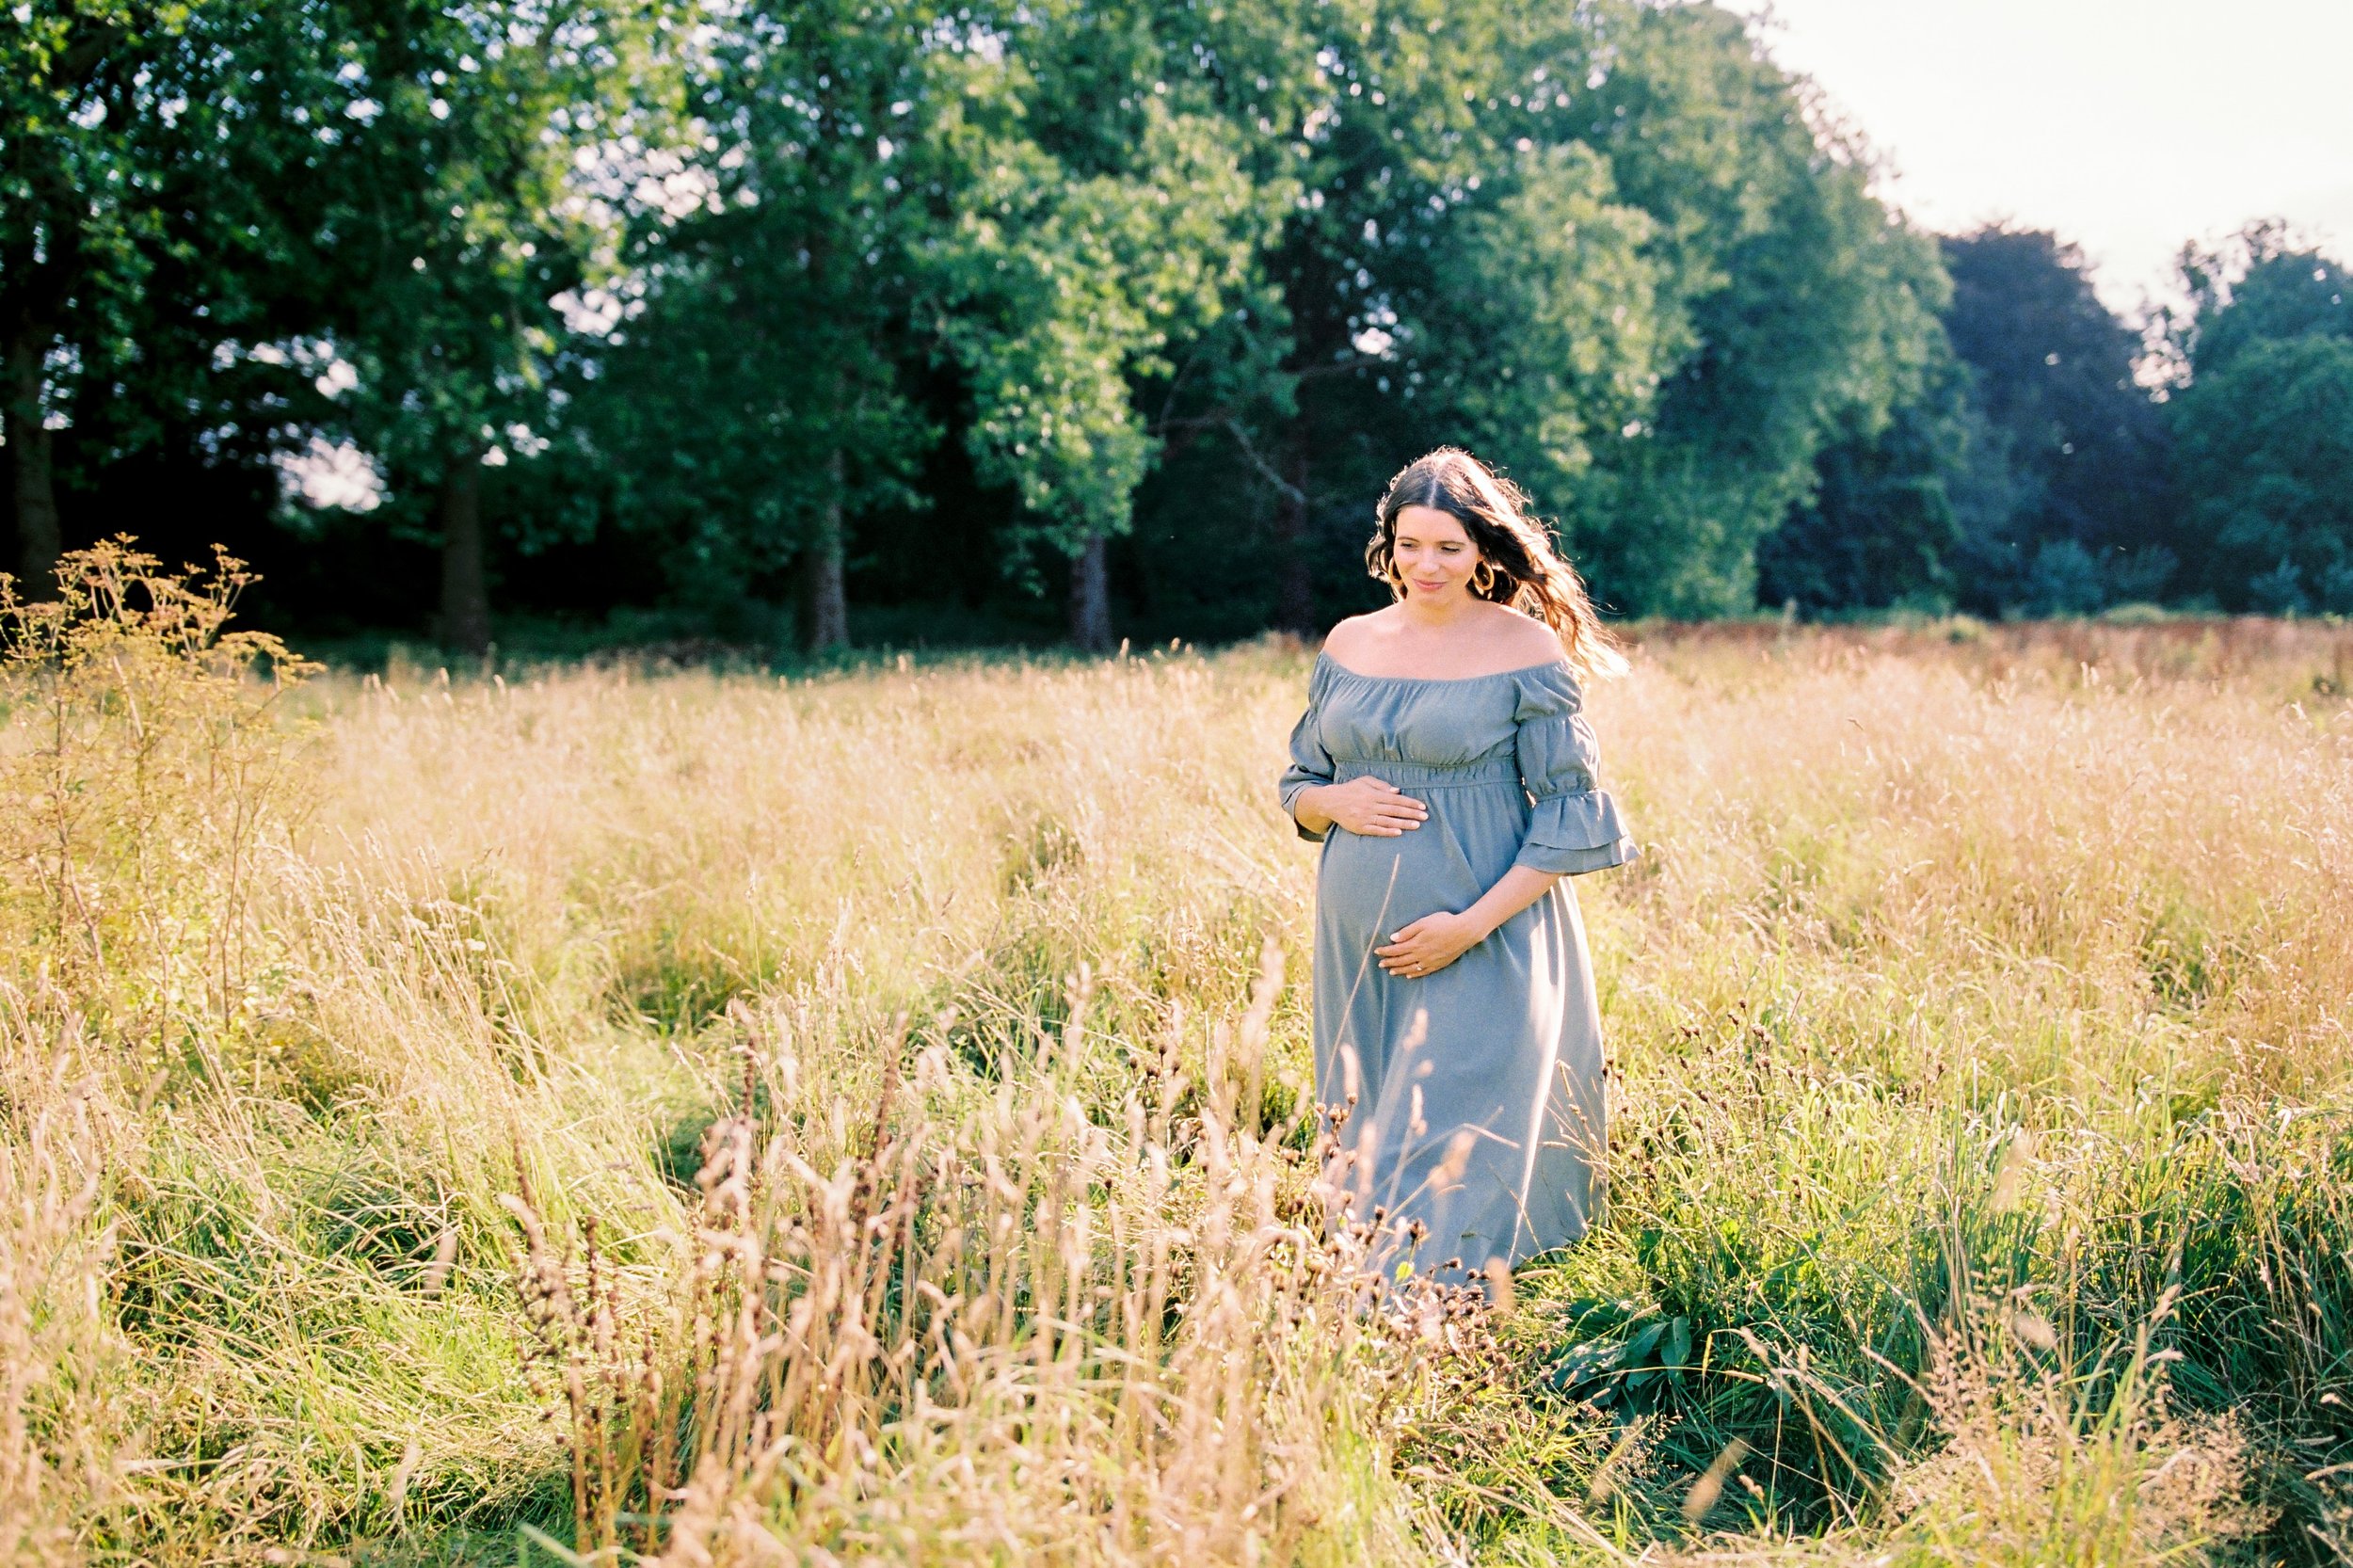 romantic pregnancy portraits on film - West London Maternity Photographer-08.jpg